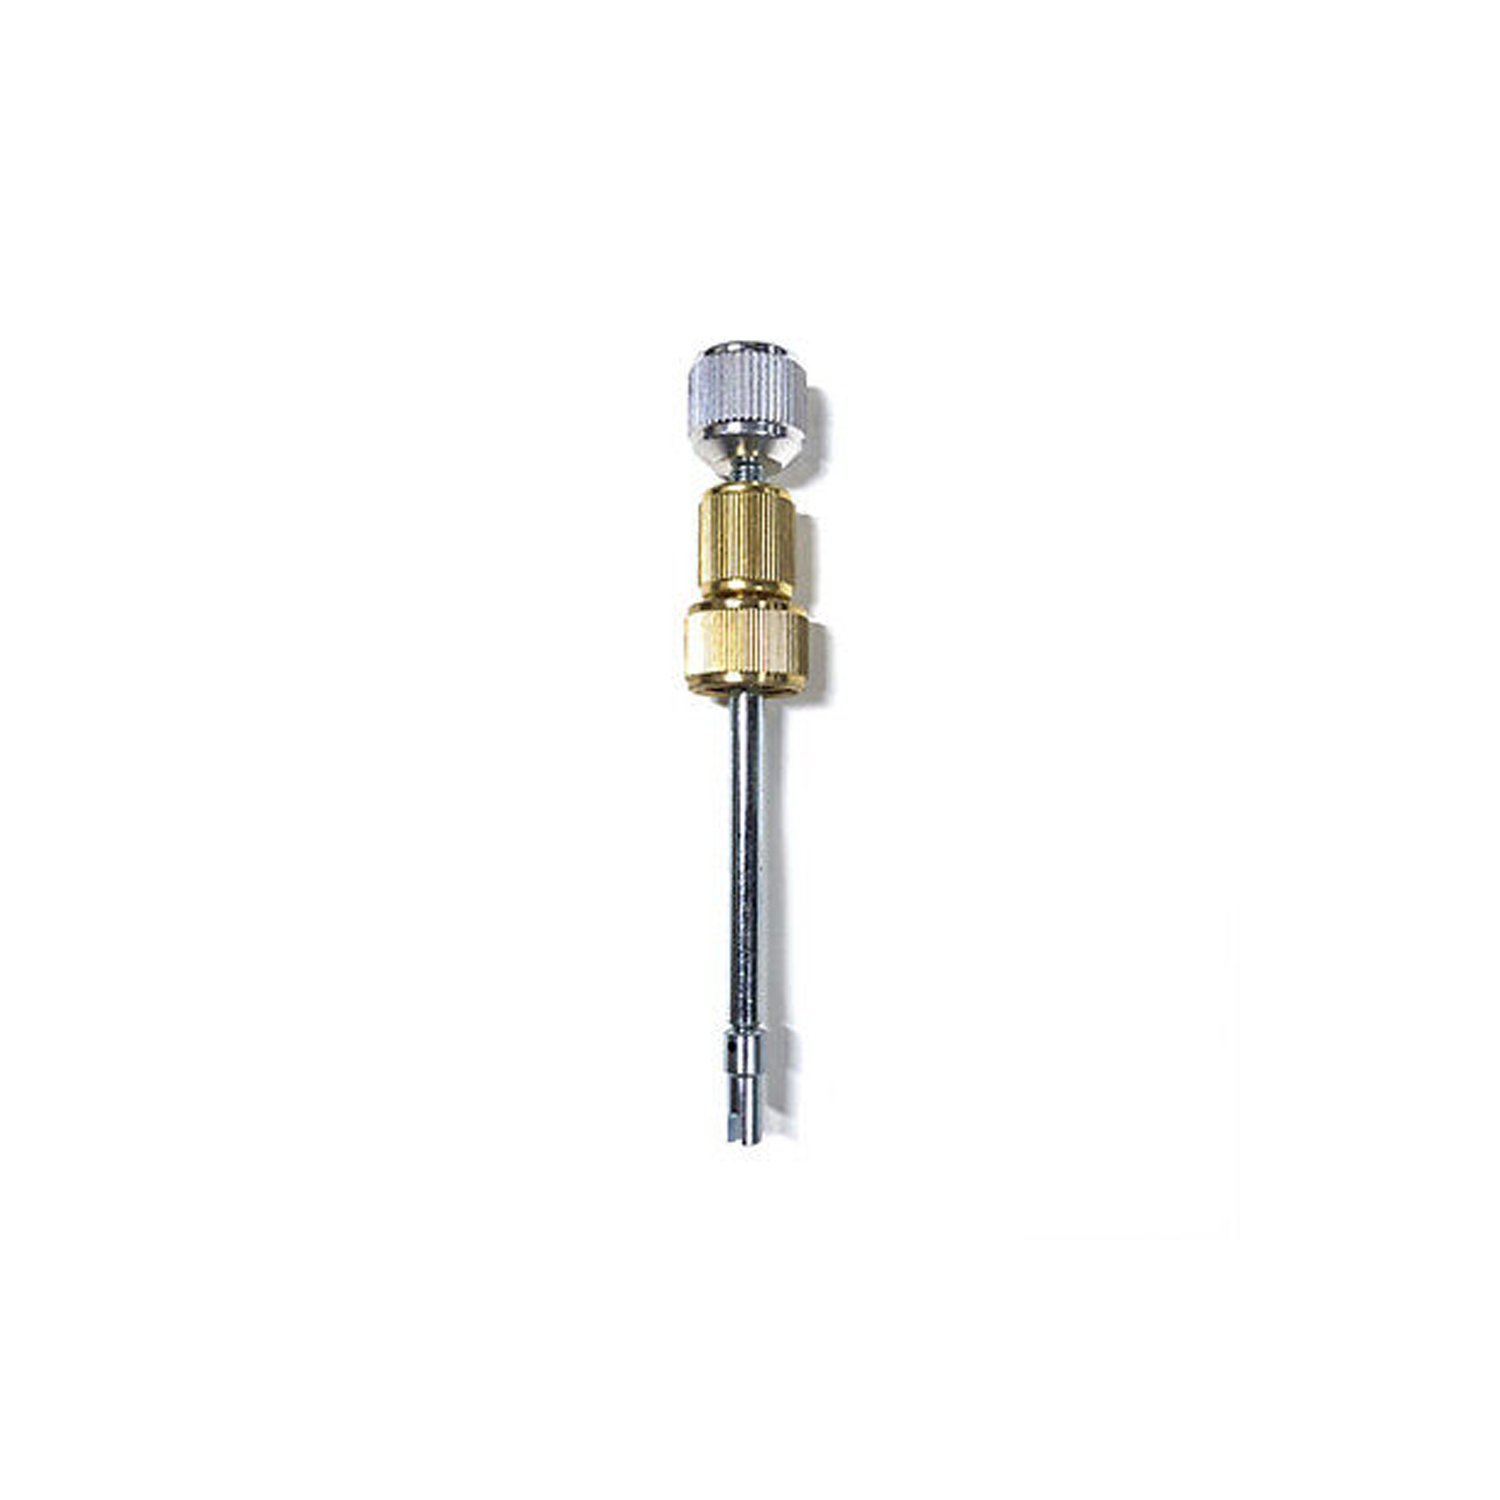 Eaton R134a LP valve core tool - 4